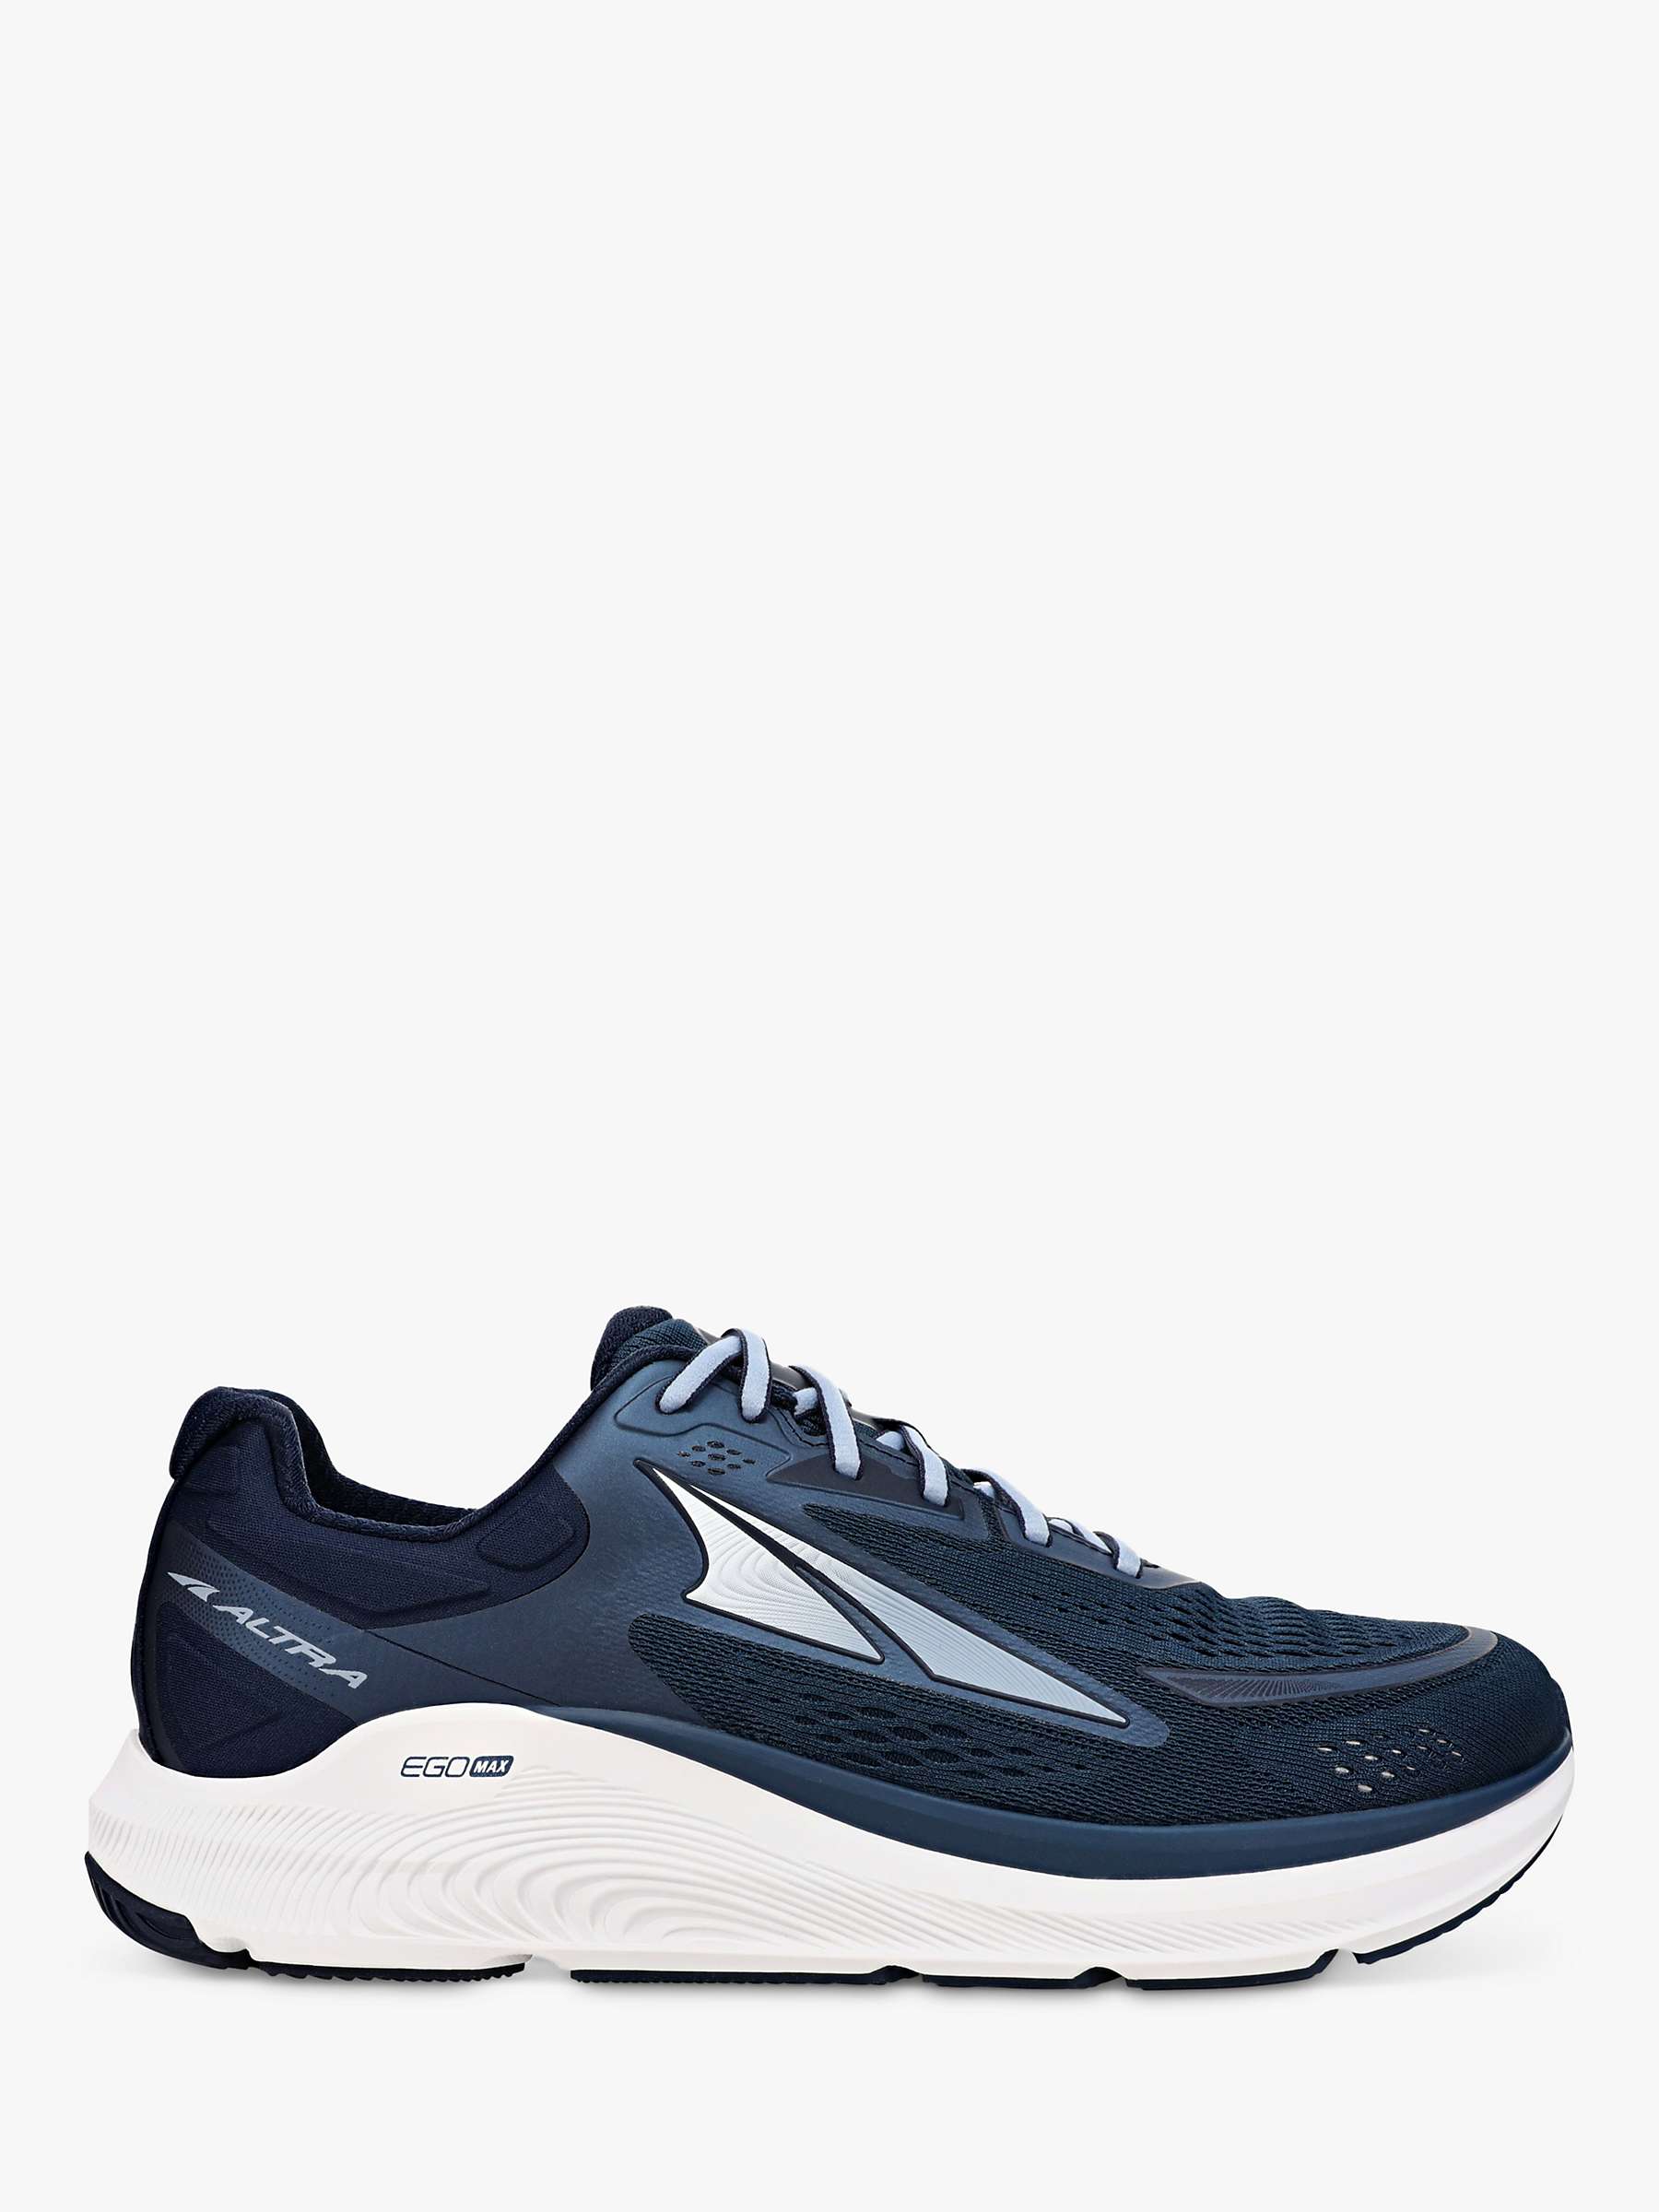 Buy Altra Paradigm 6 Men's Running Shoes Online at johnlewis.com